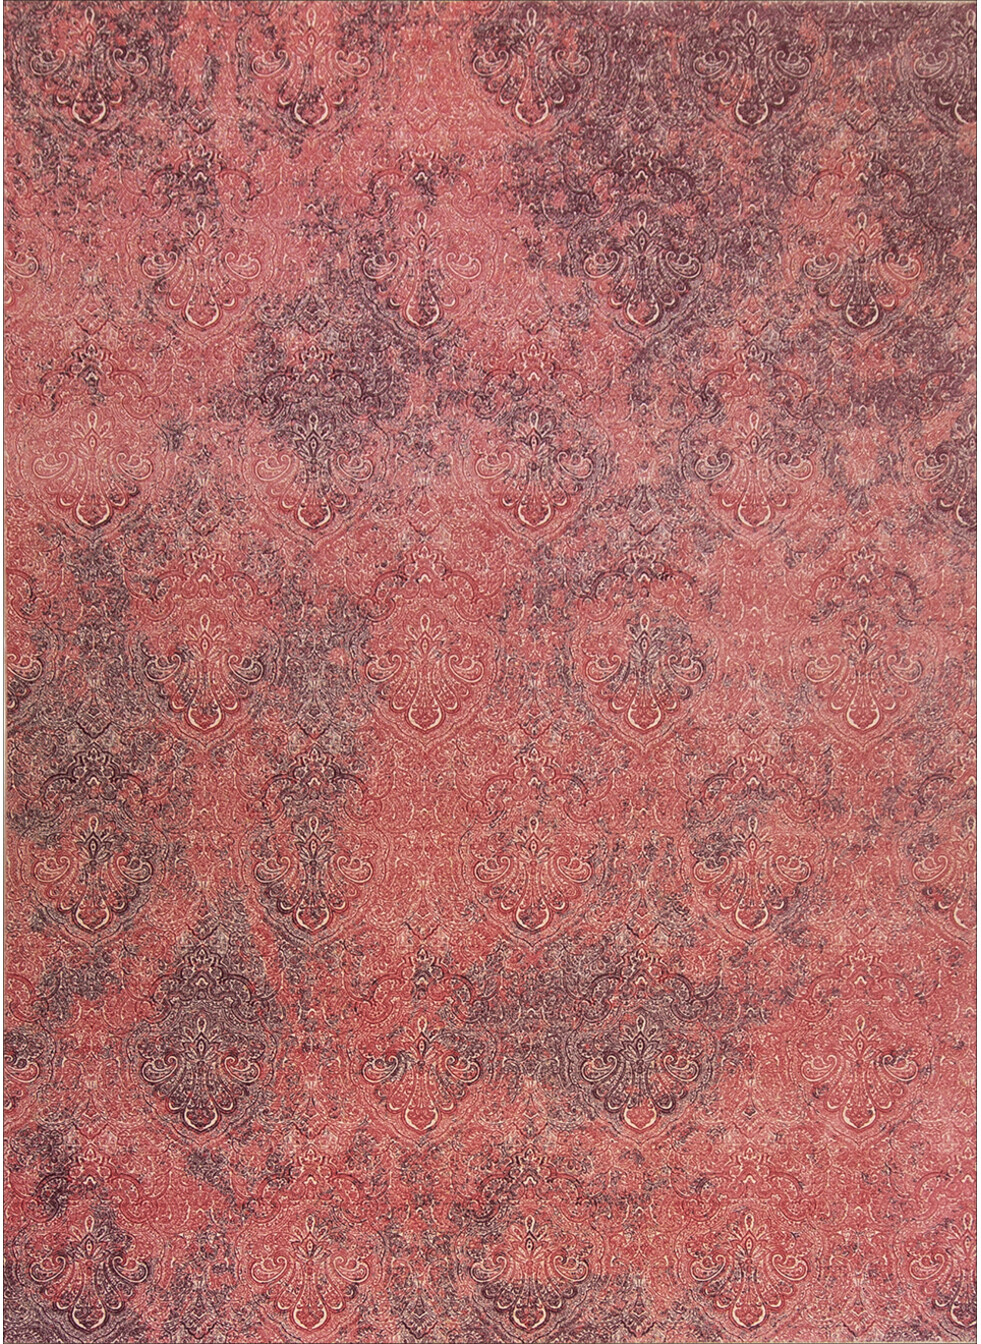 فرش دستی ماشینی ابریشم کد M26